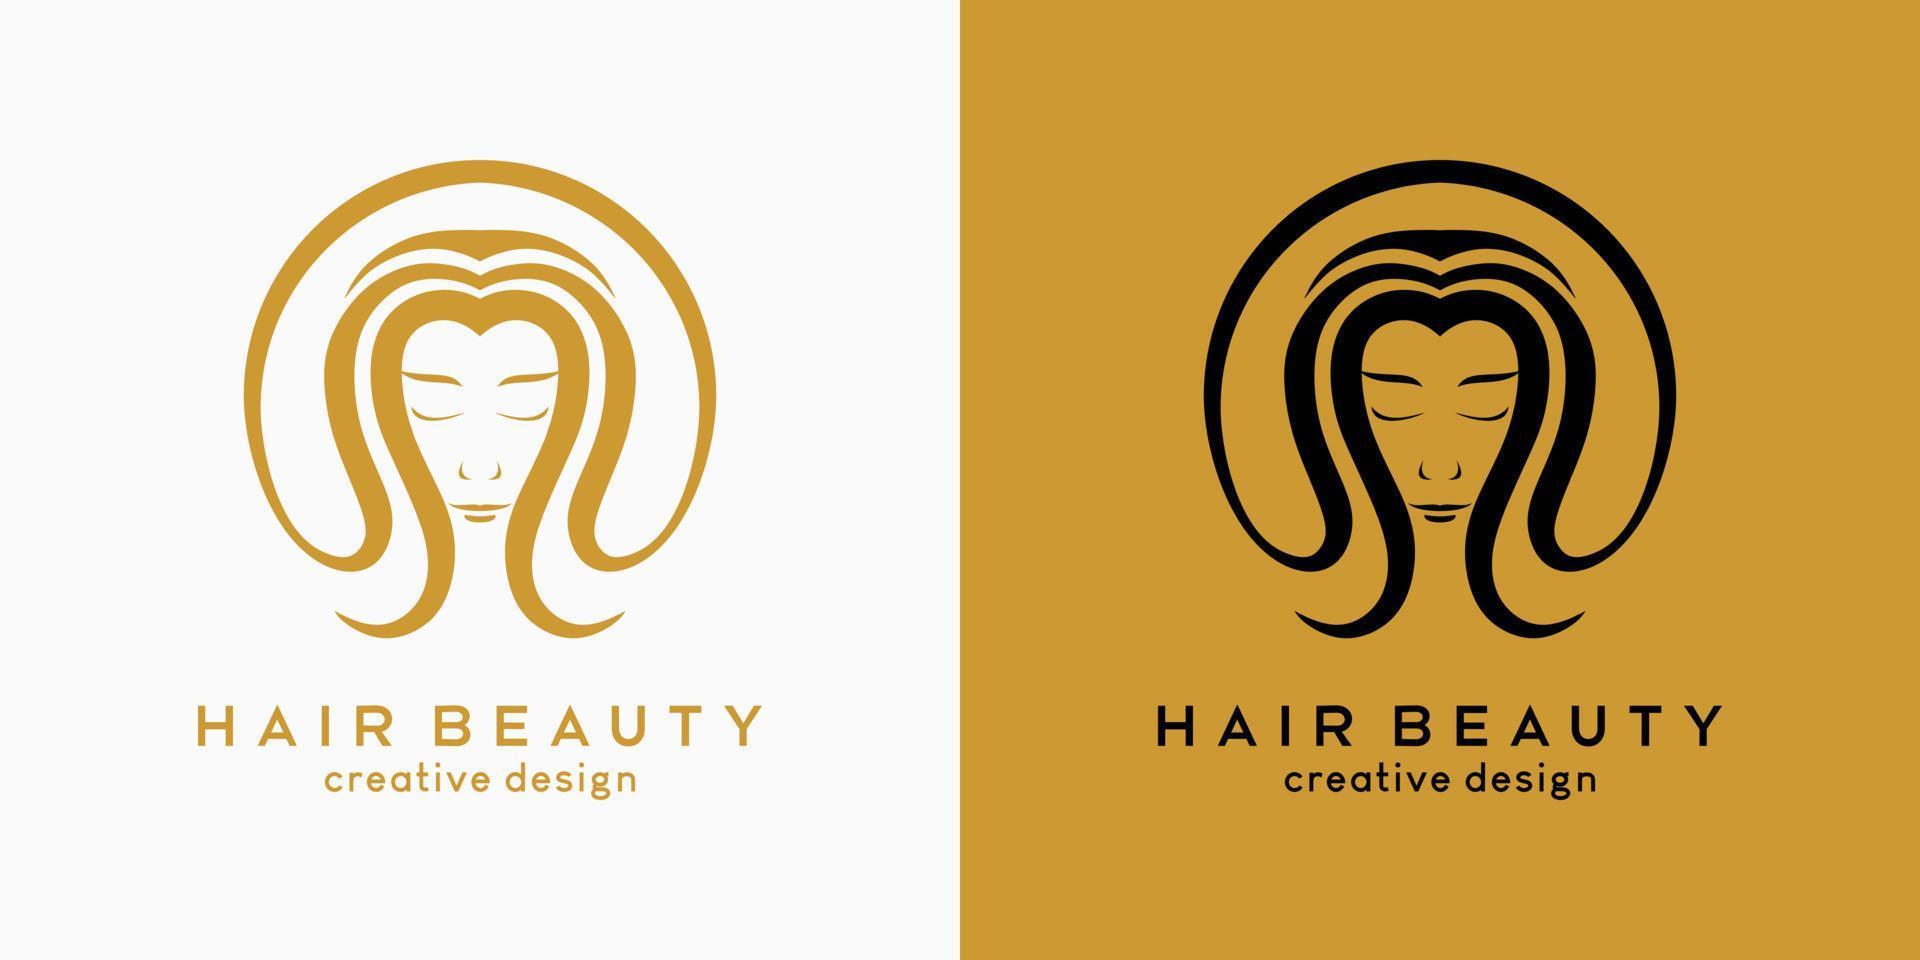 Hair salon logo design, hair beauty or hair care, woman face with hair in hand drawn concept in circle vector